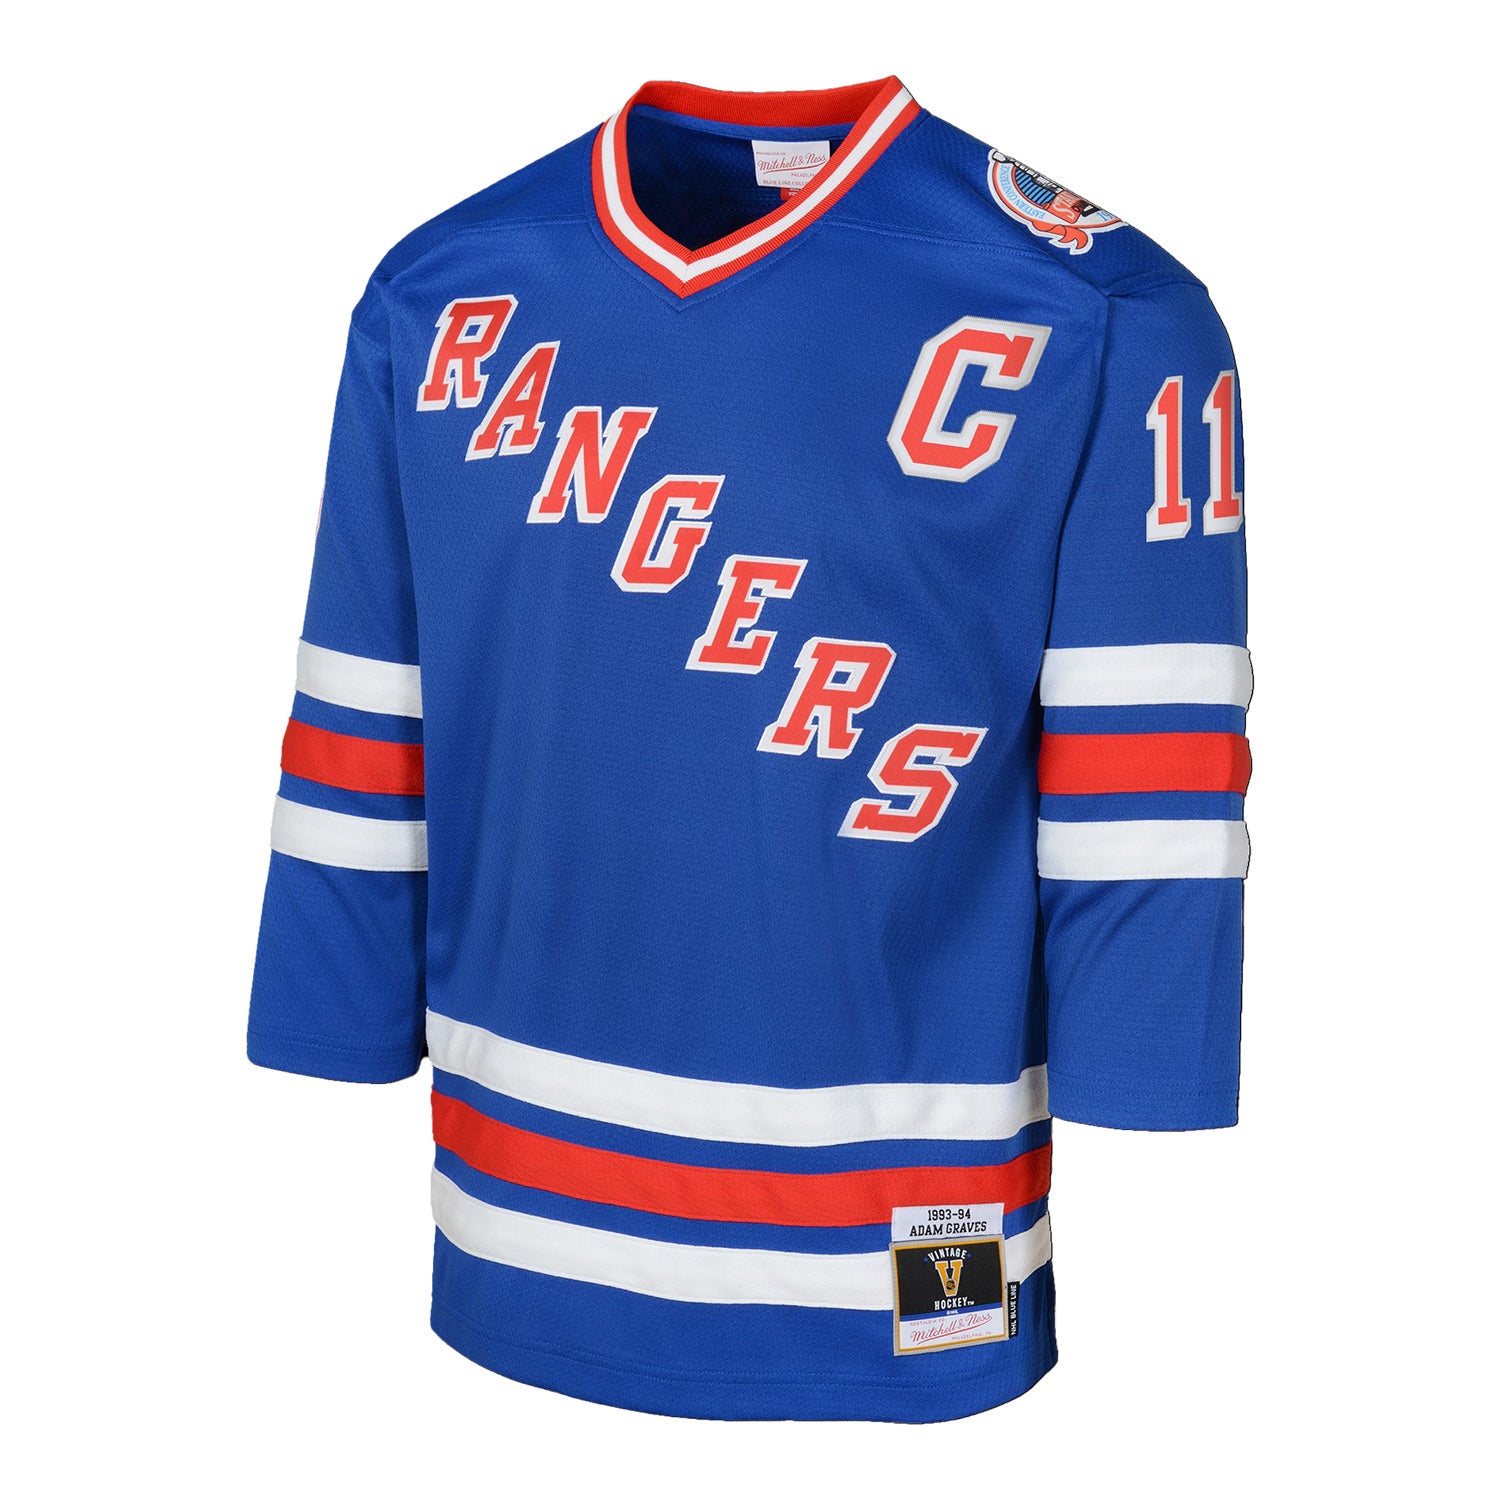 1993-94 Mark Messier Game Worn New York Rangers Jersey. Hockey